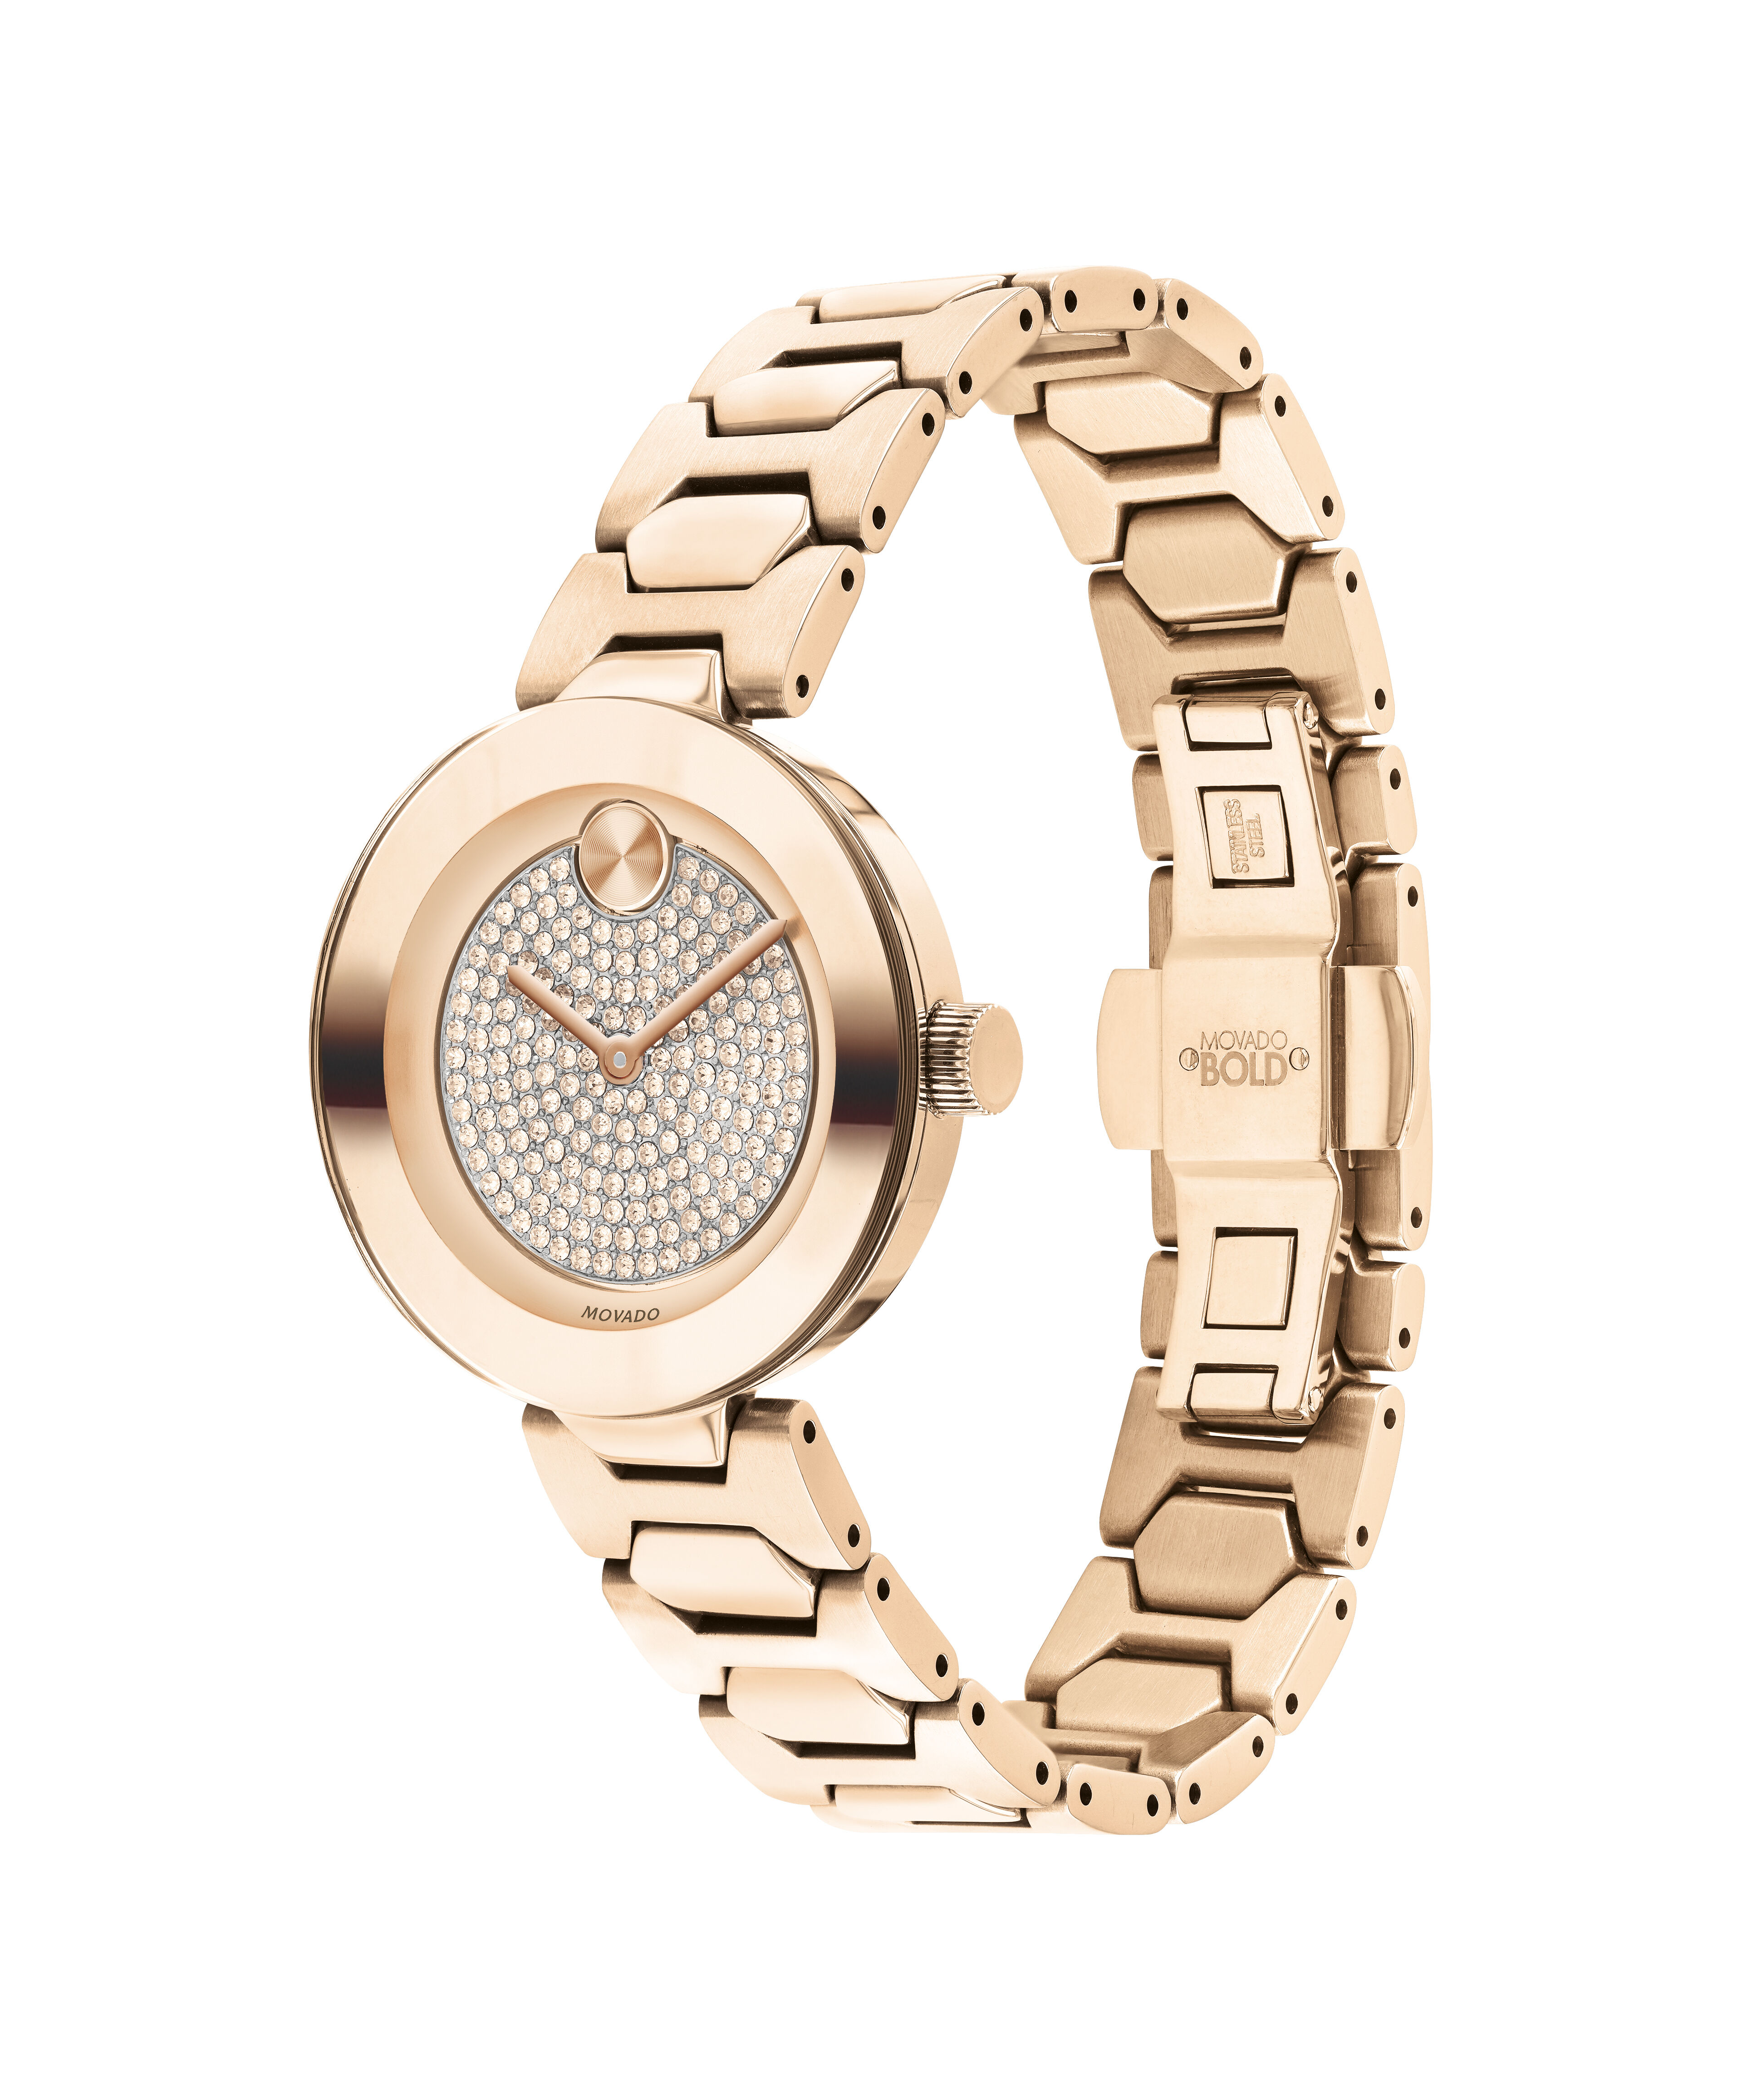 Movado 84 A1 1831 Women's Quartz Watch Stainless Steel Black Dial Diamond BezelMovado 84 E4 1857